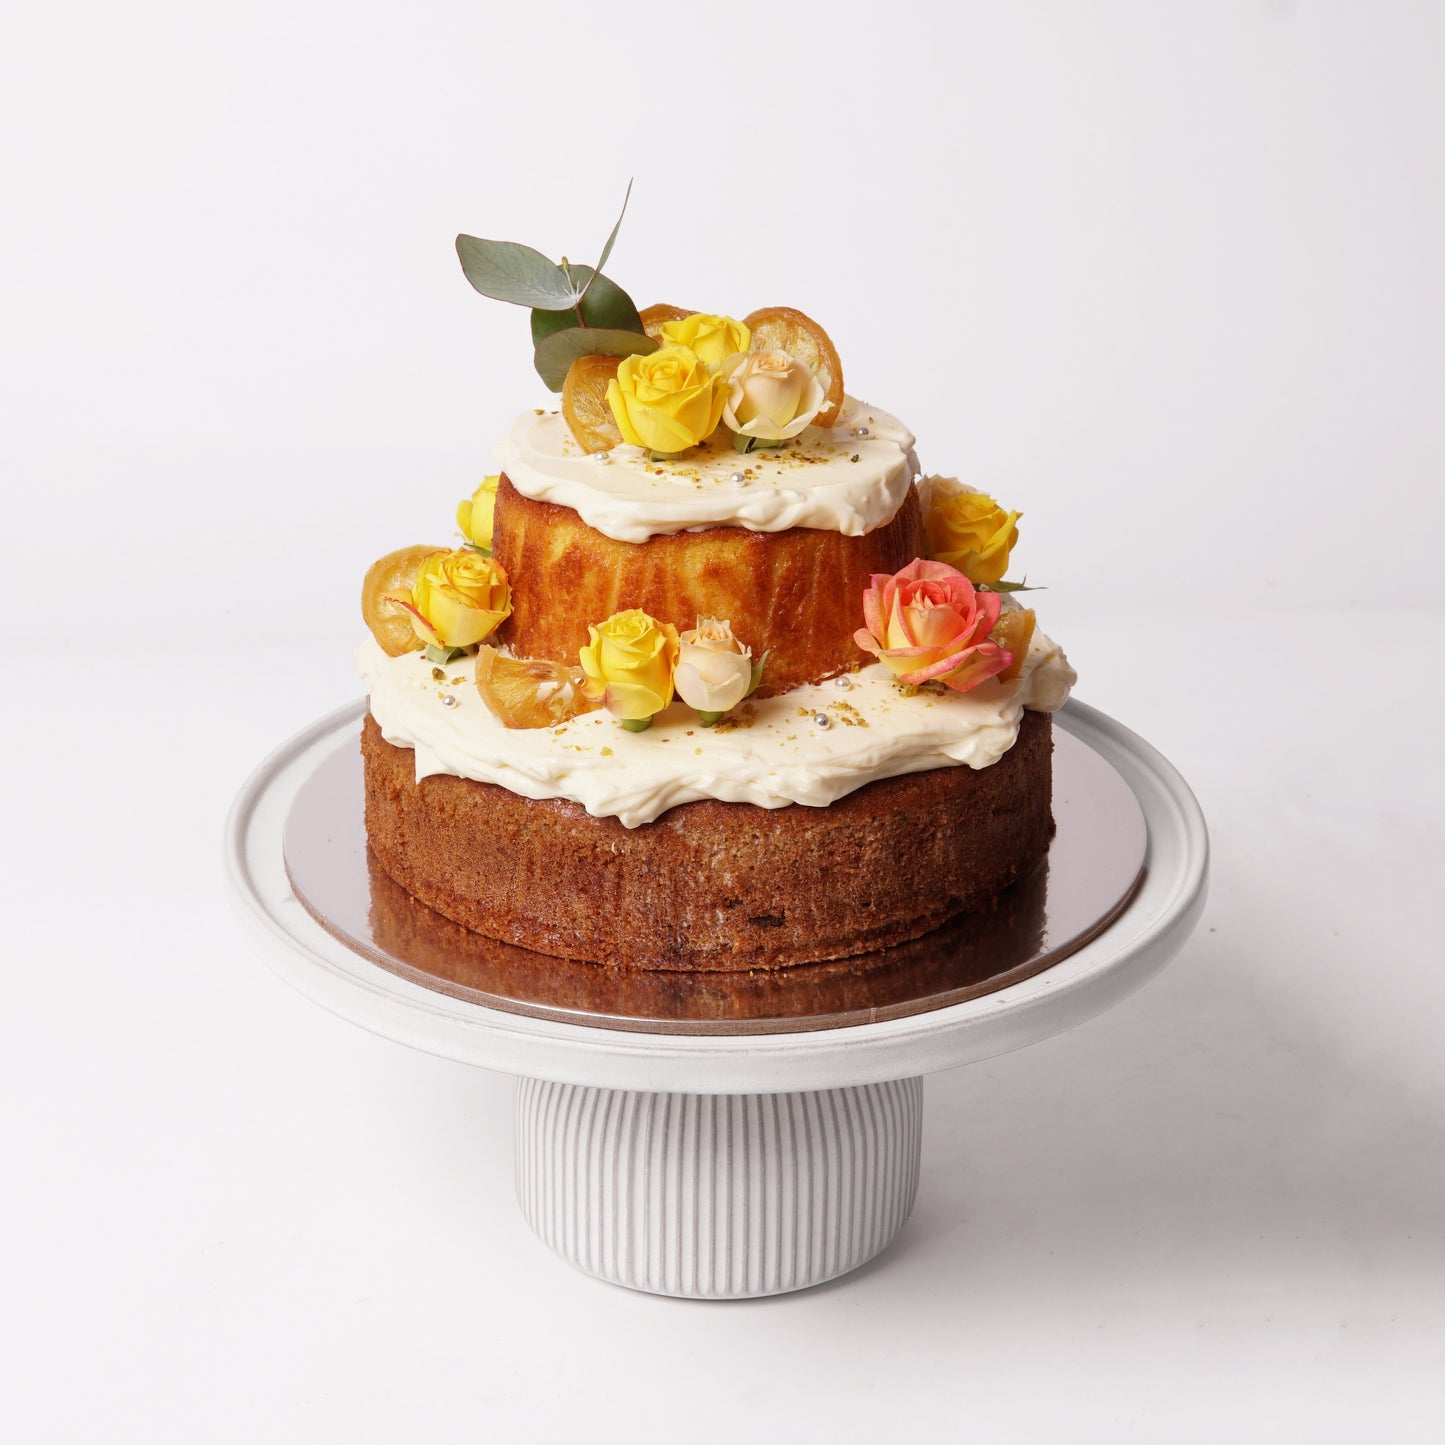 TOMORROW - Orange & Almond (GF) Cake